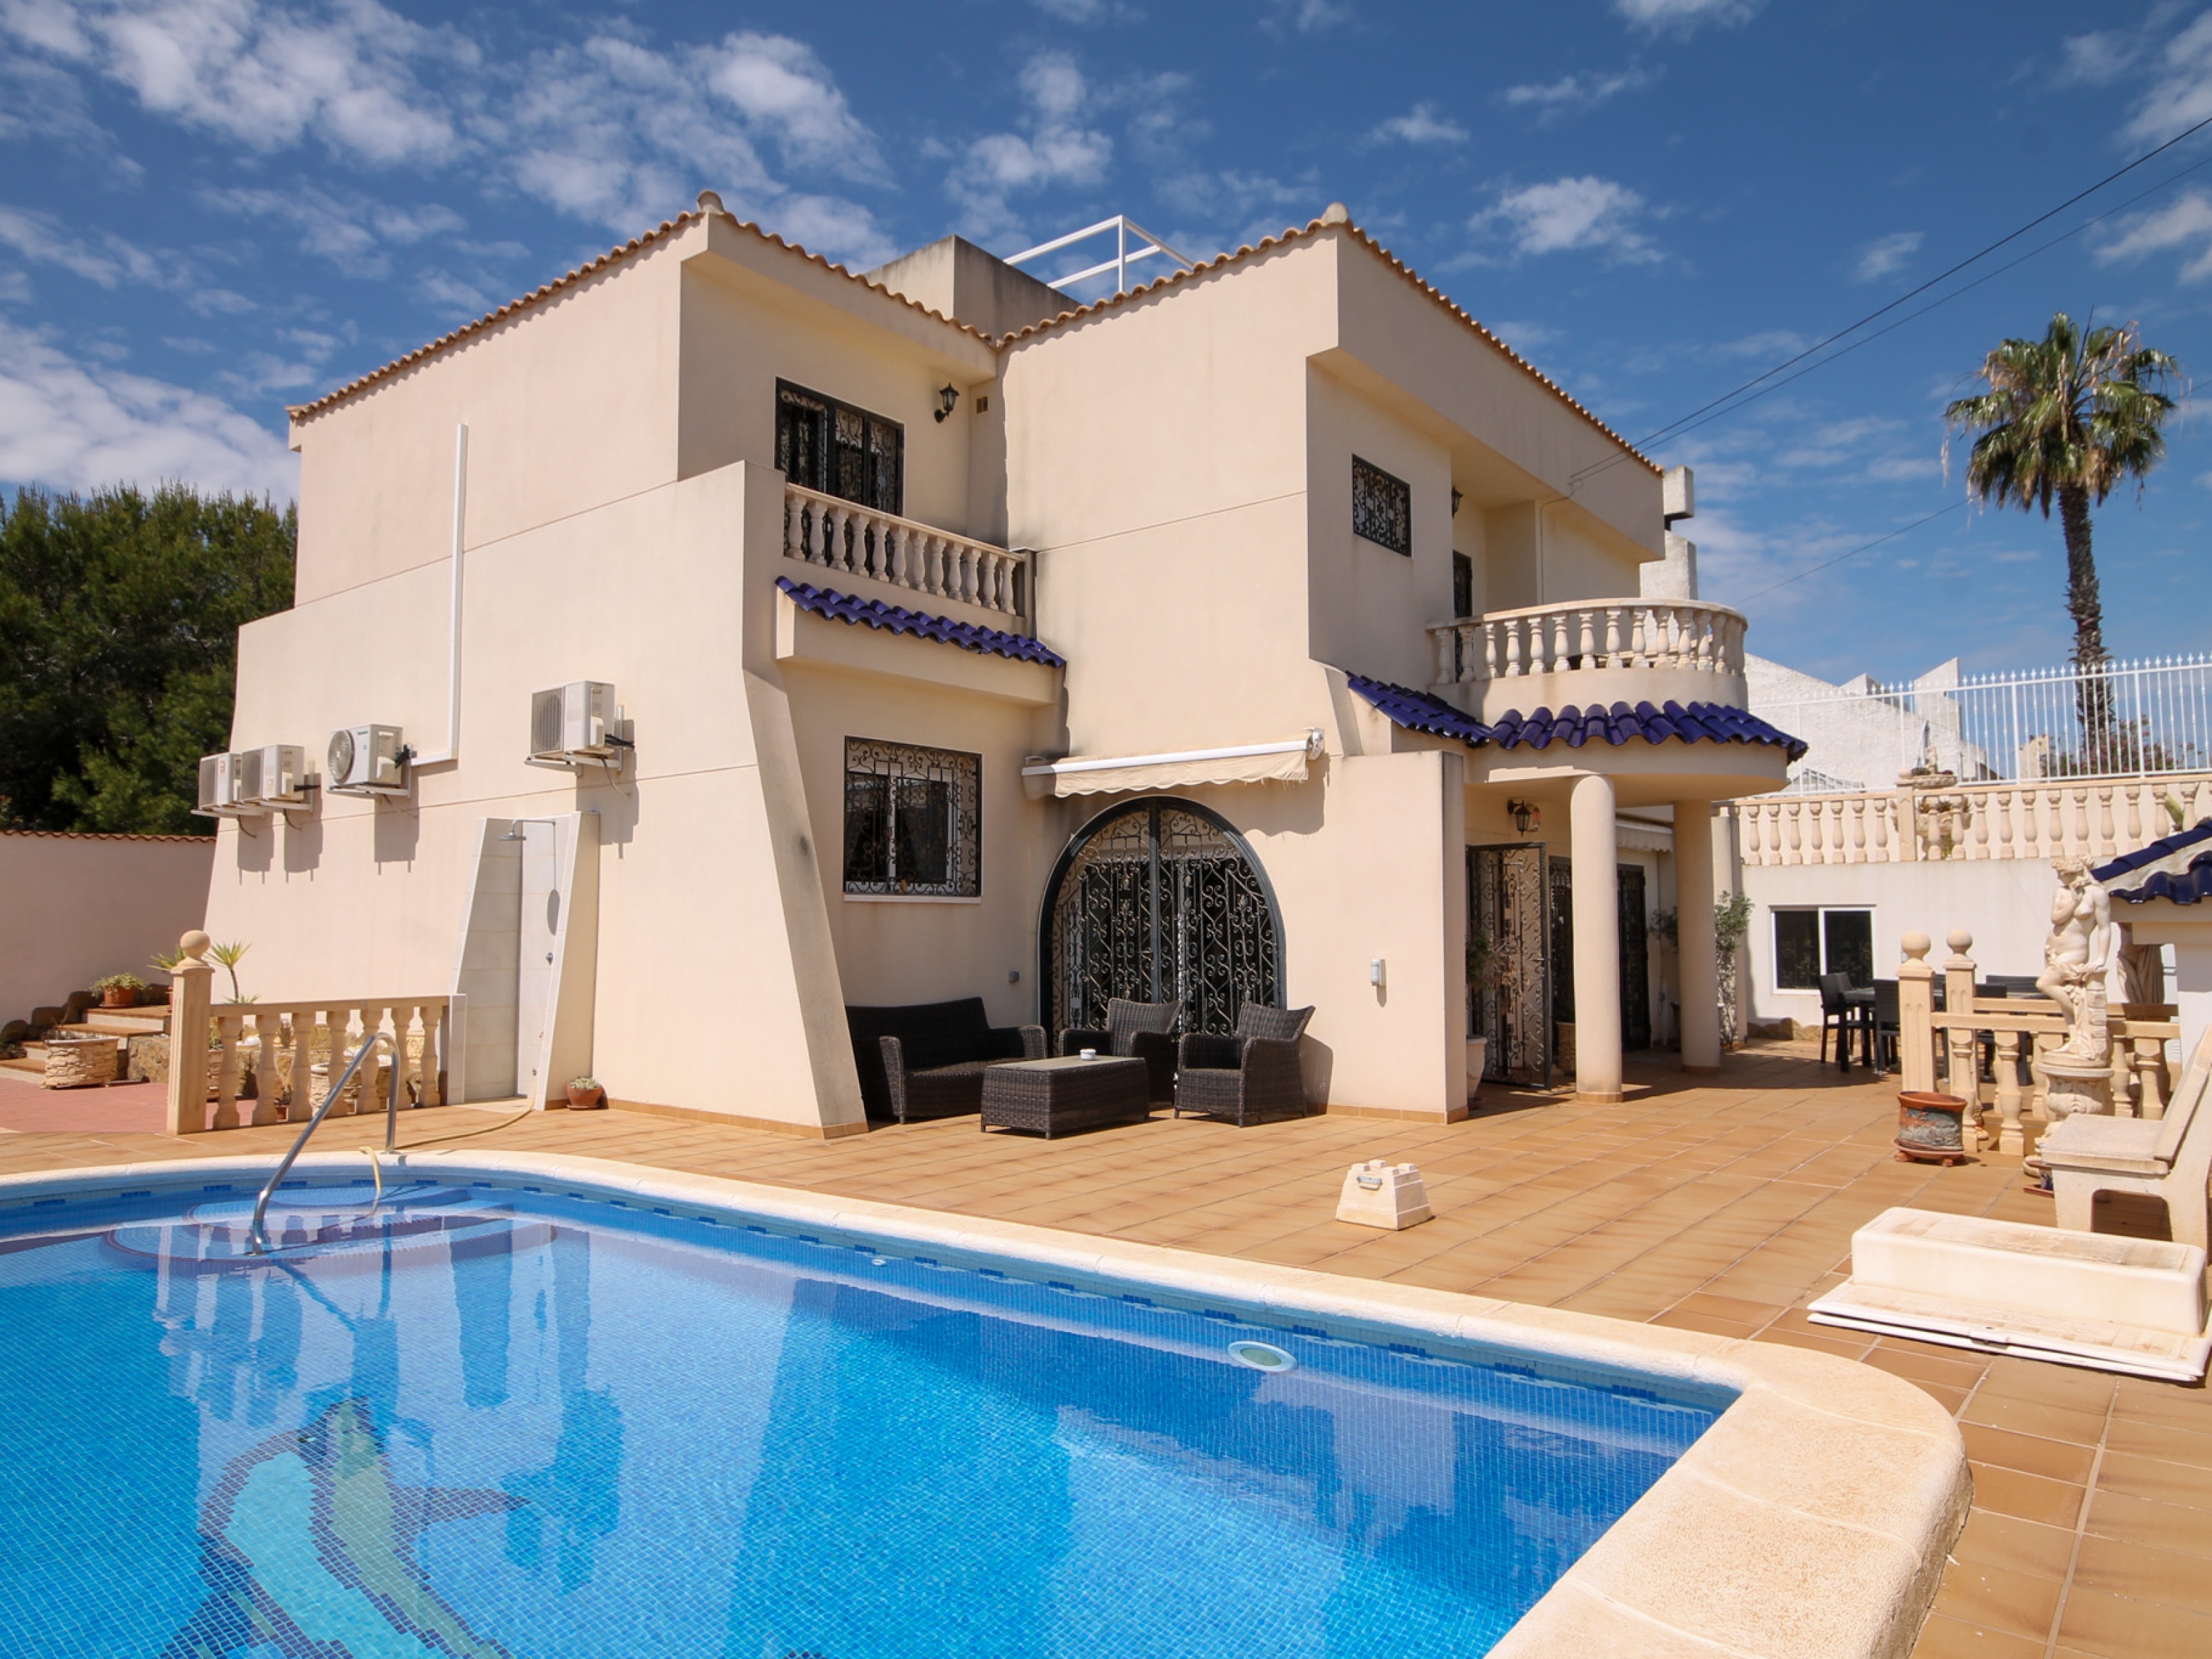 Stunning 5 bedroom villa with pool